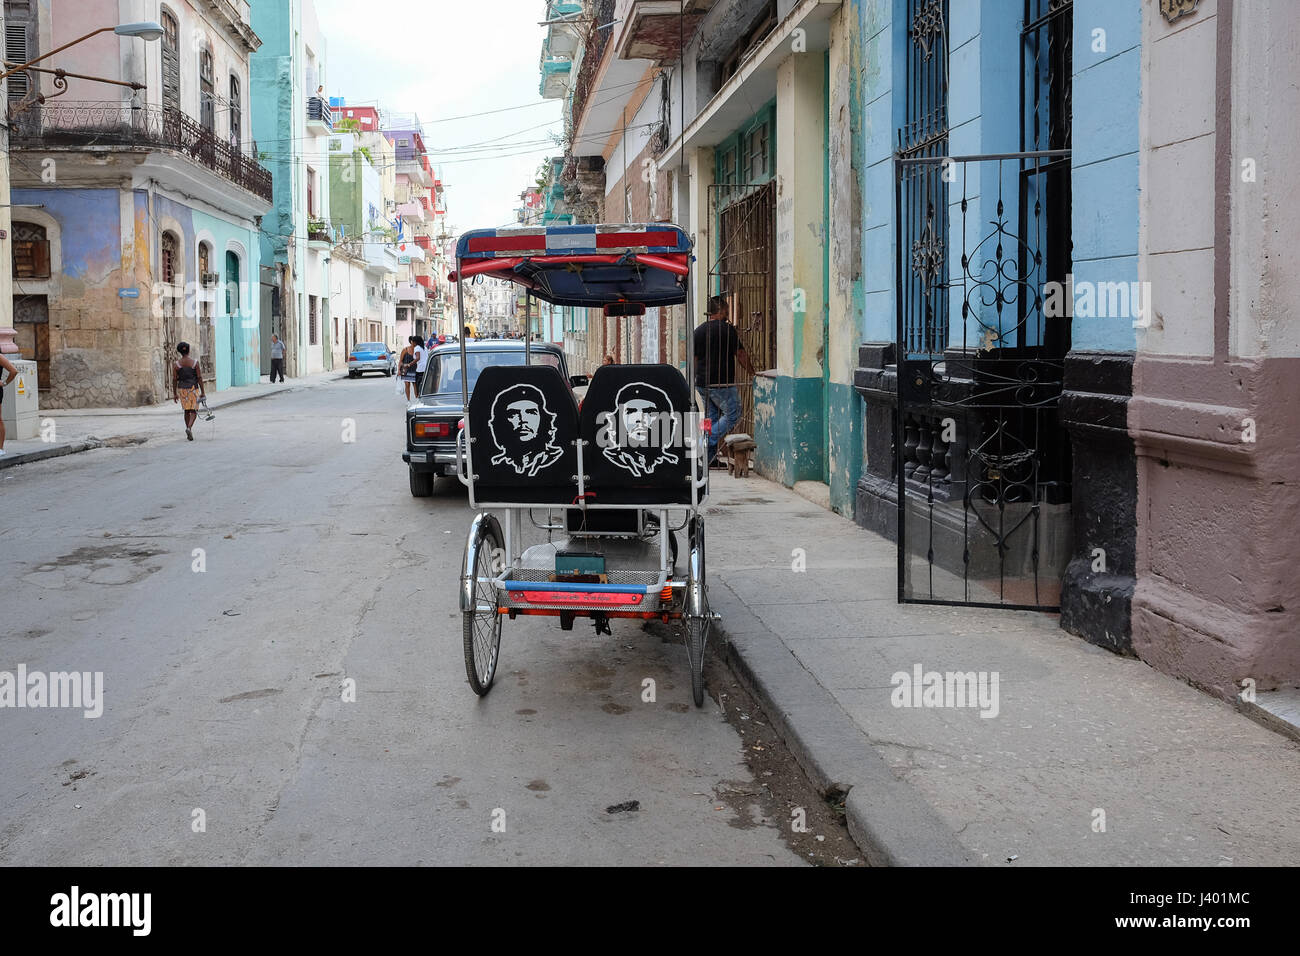 Che guevara bike taxi parked the streets of Havana, Cuba Stock Photo